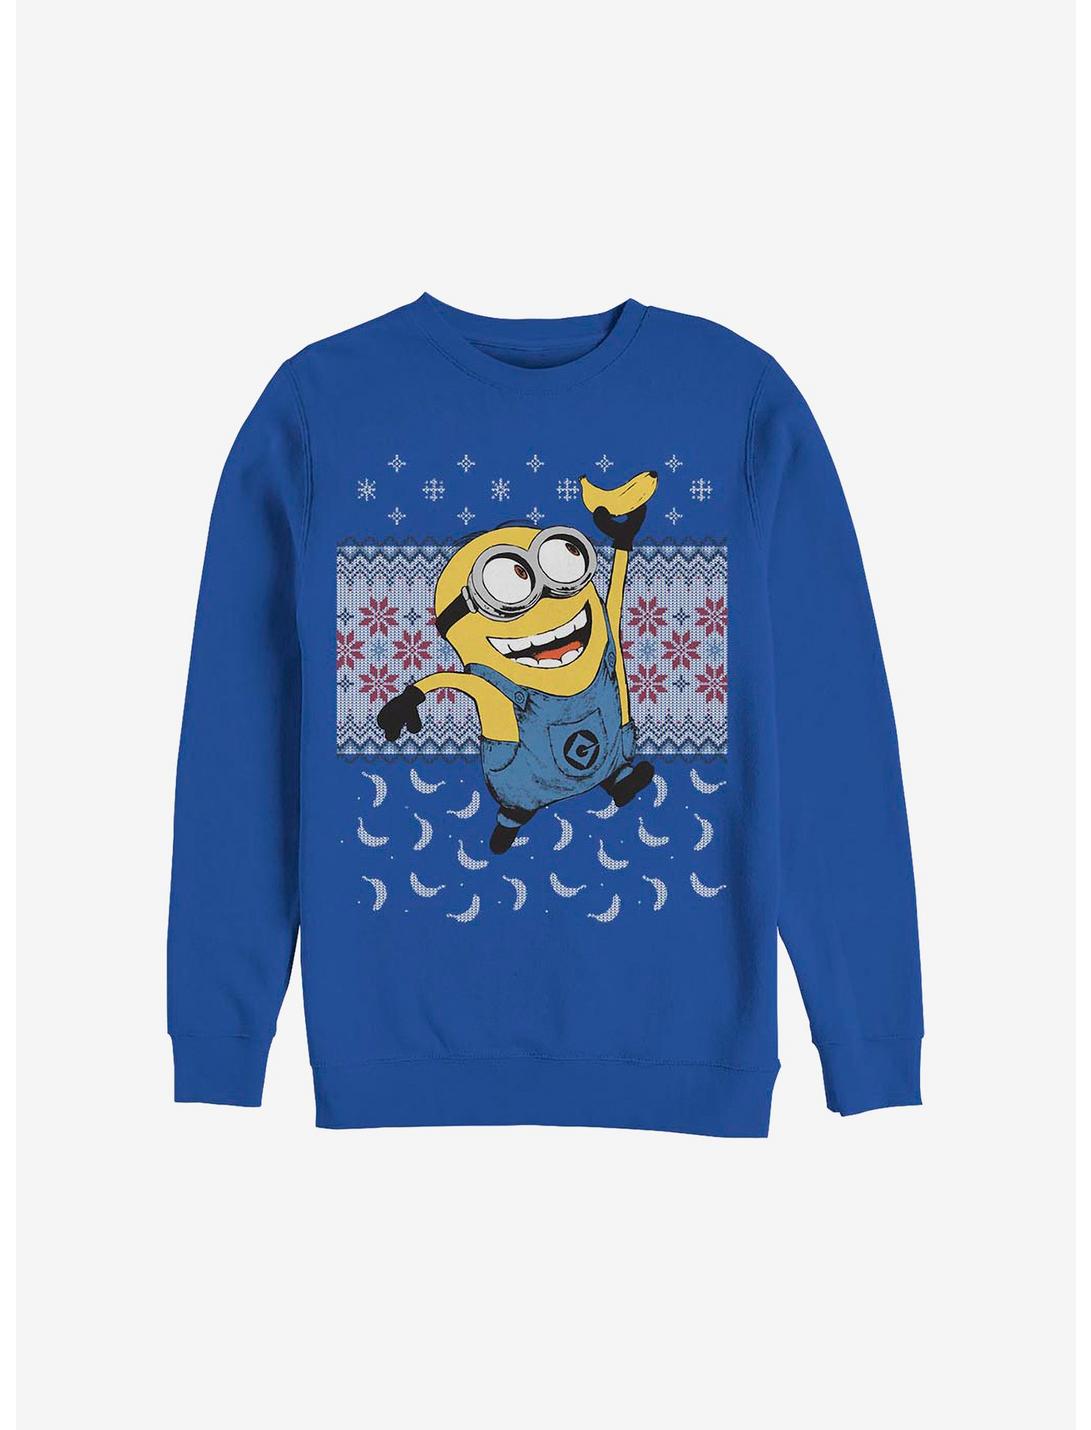 Minion Banana Christmas Sweatshirt, ROYAL, hi-res